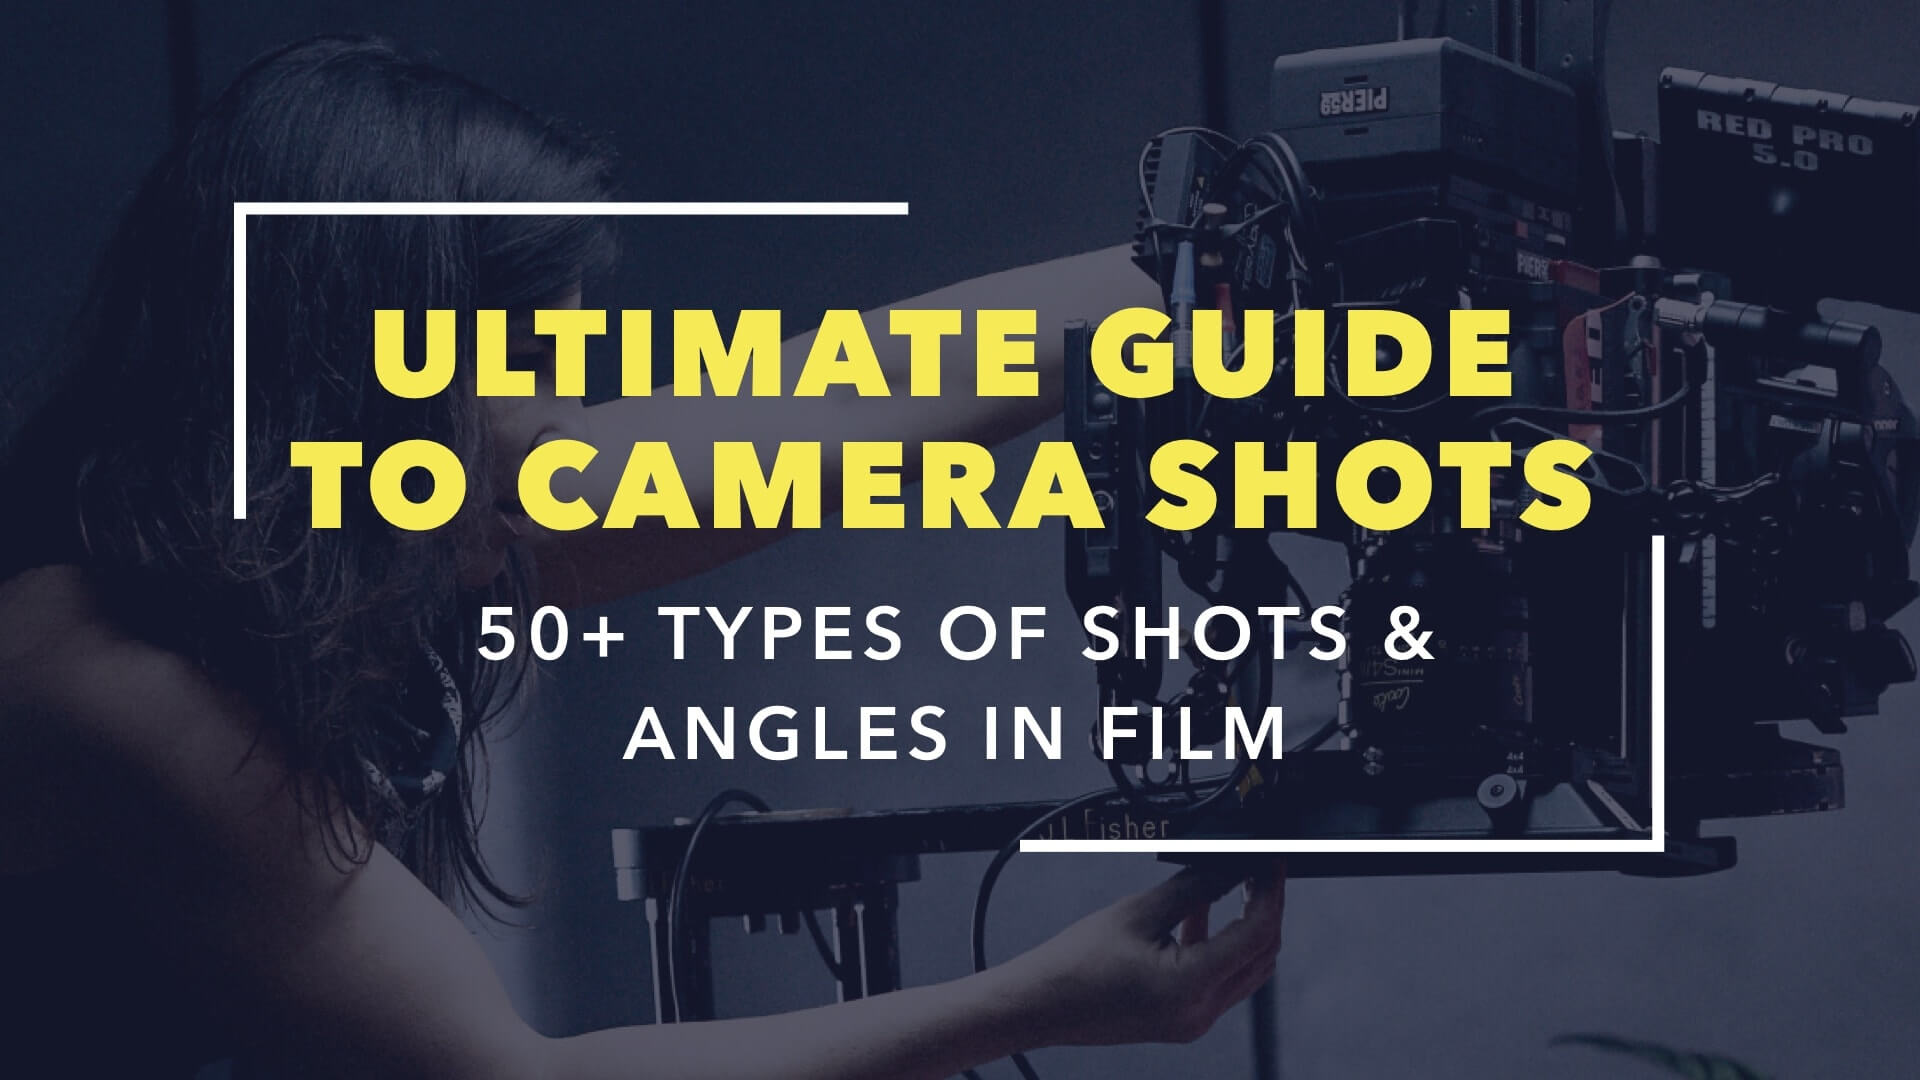 Ultimate Guide To Camera Shots - Social Image - StudioBinder